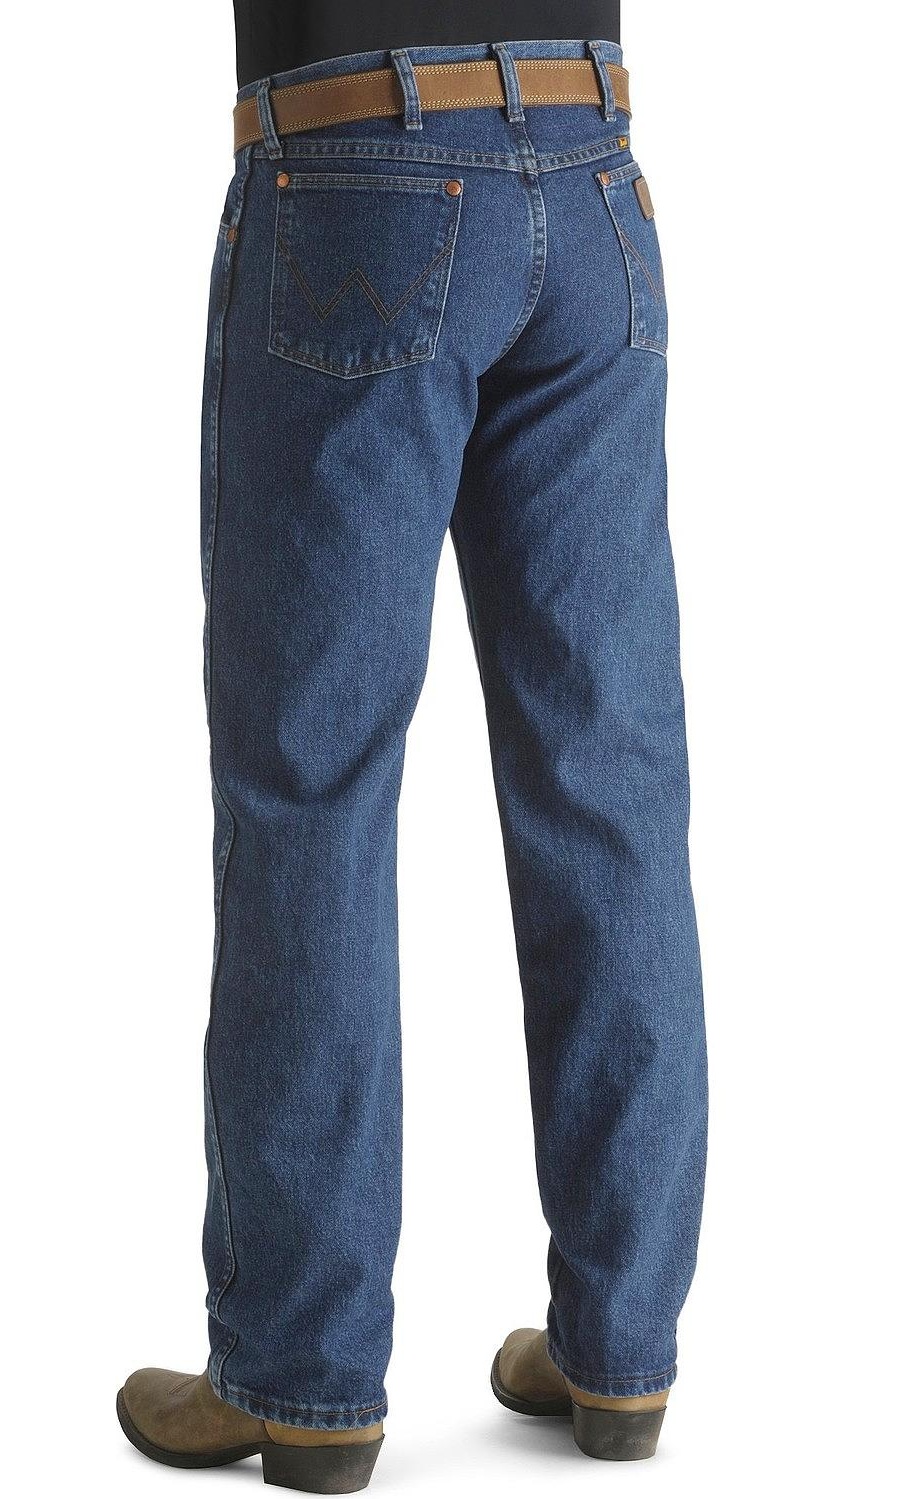 wrangler men's tall cowboy cut original fit jean, stonewashed, 46x34 - image 1 of 2